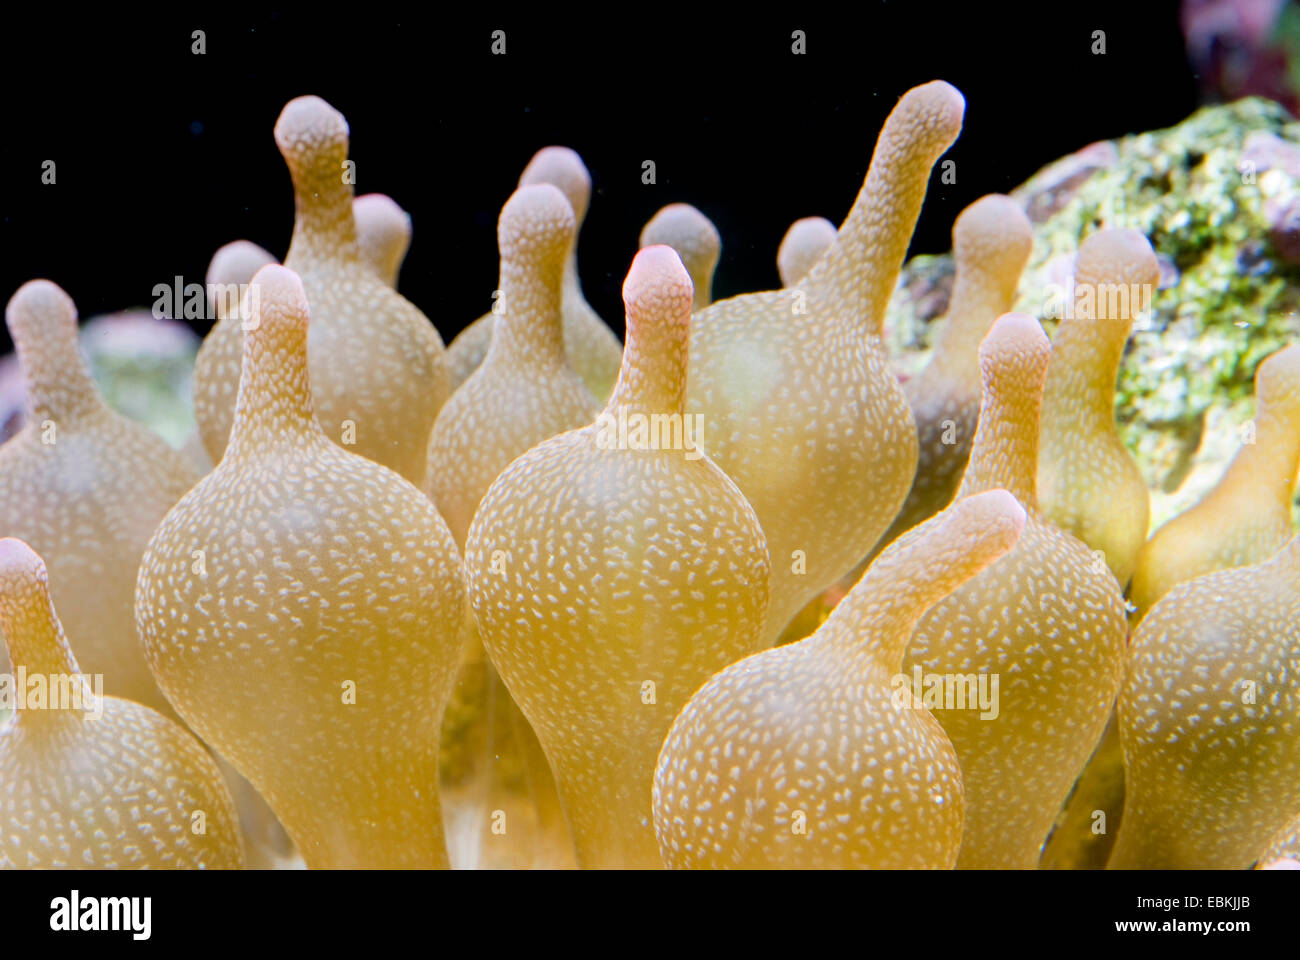 four-colored anemone, bubble-tip anemone, bulb-tip anemone, bulb-tentacle sea anemone, maroon anemone (Entacmaea quadricolor), close-up view Stock Photo